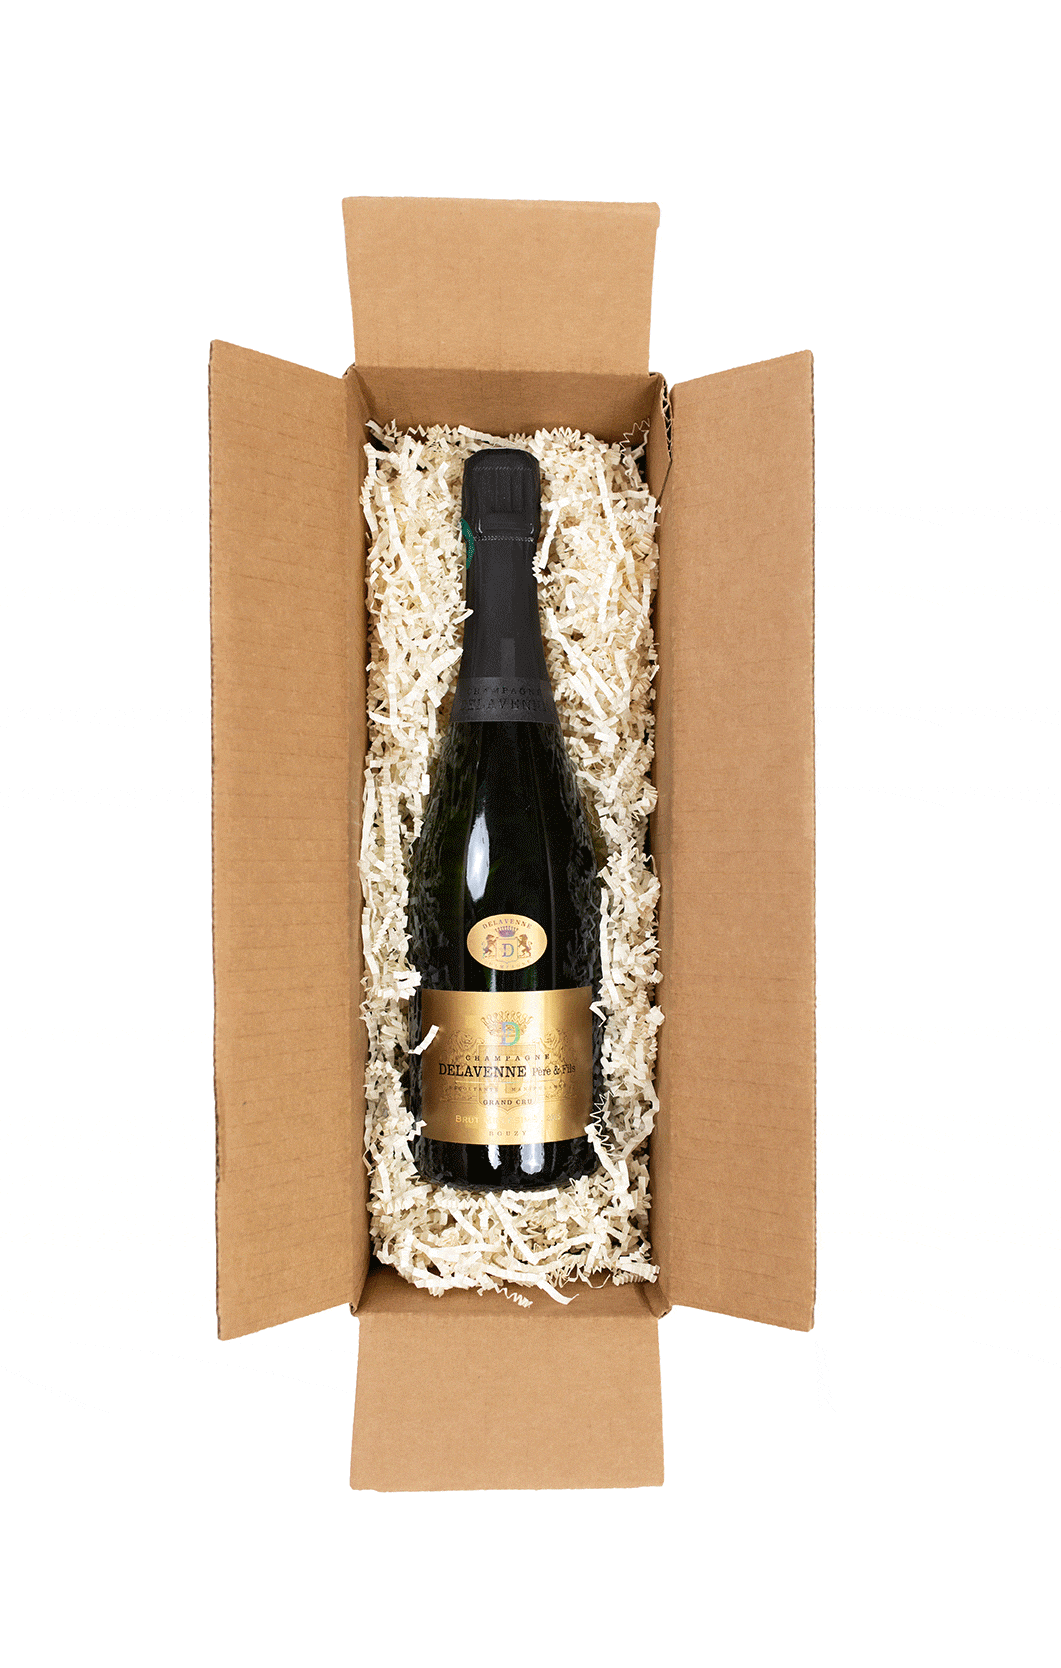 Chandon Garden Spritz Gift Bucket 750ml - Argonaut Wine & Liquor